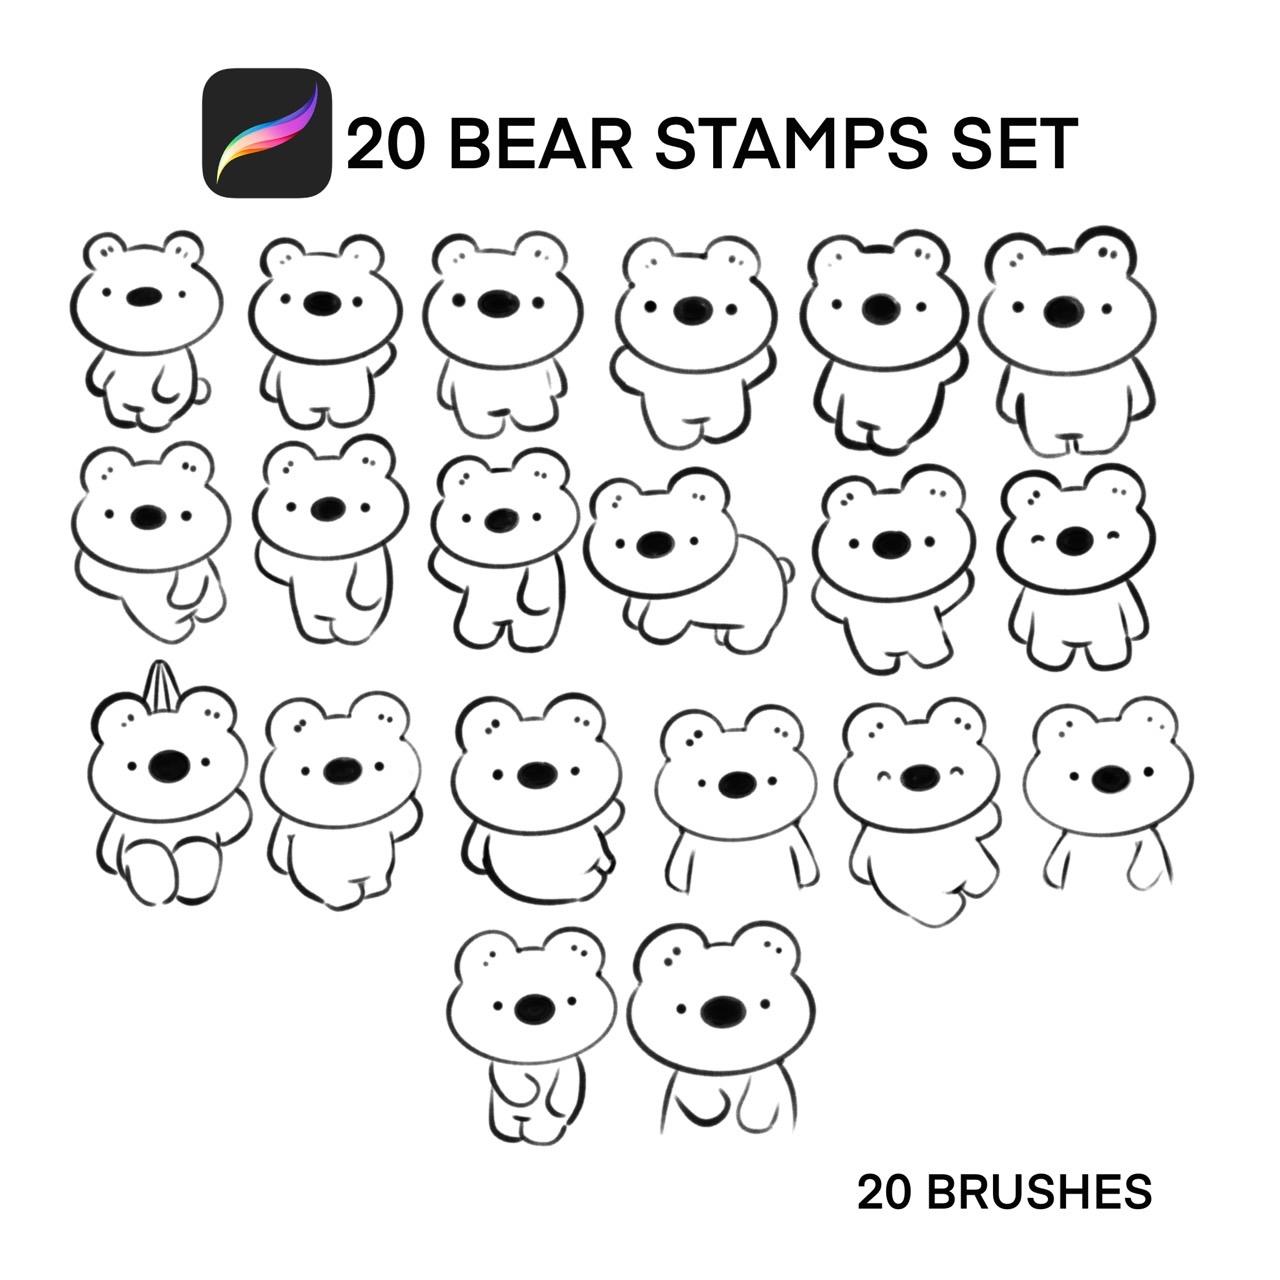 20 BEAR STAMPS SET